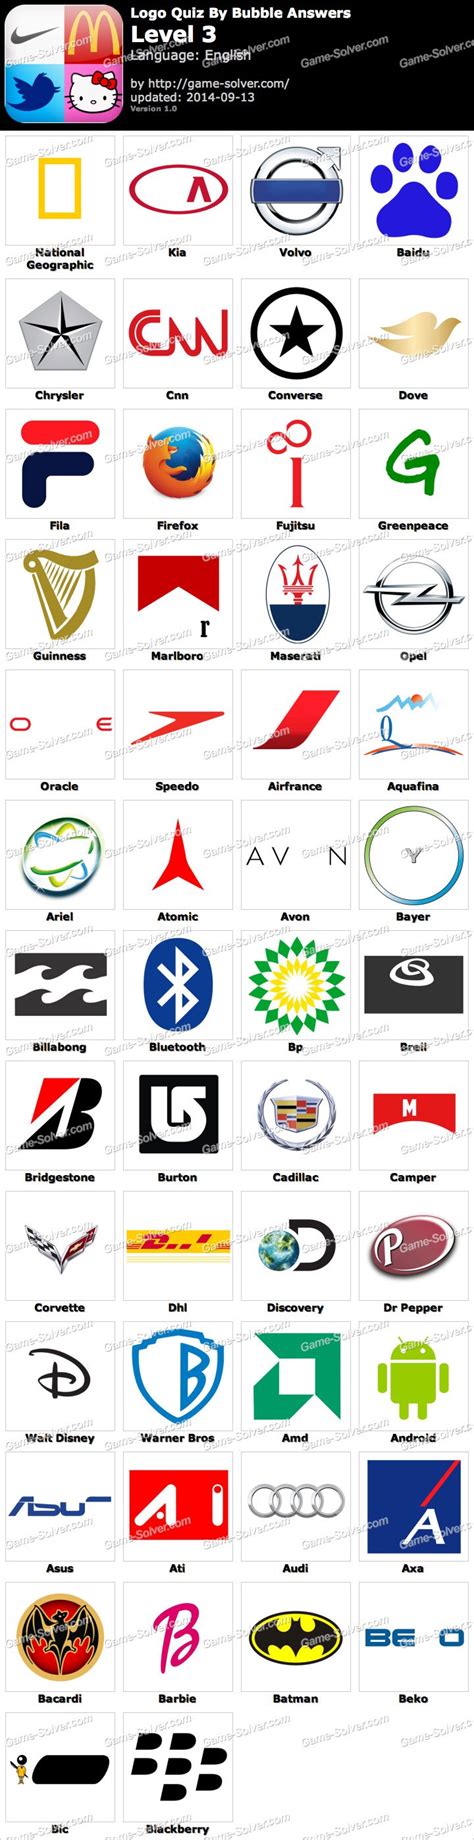 level logos